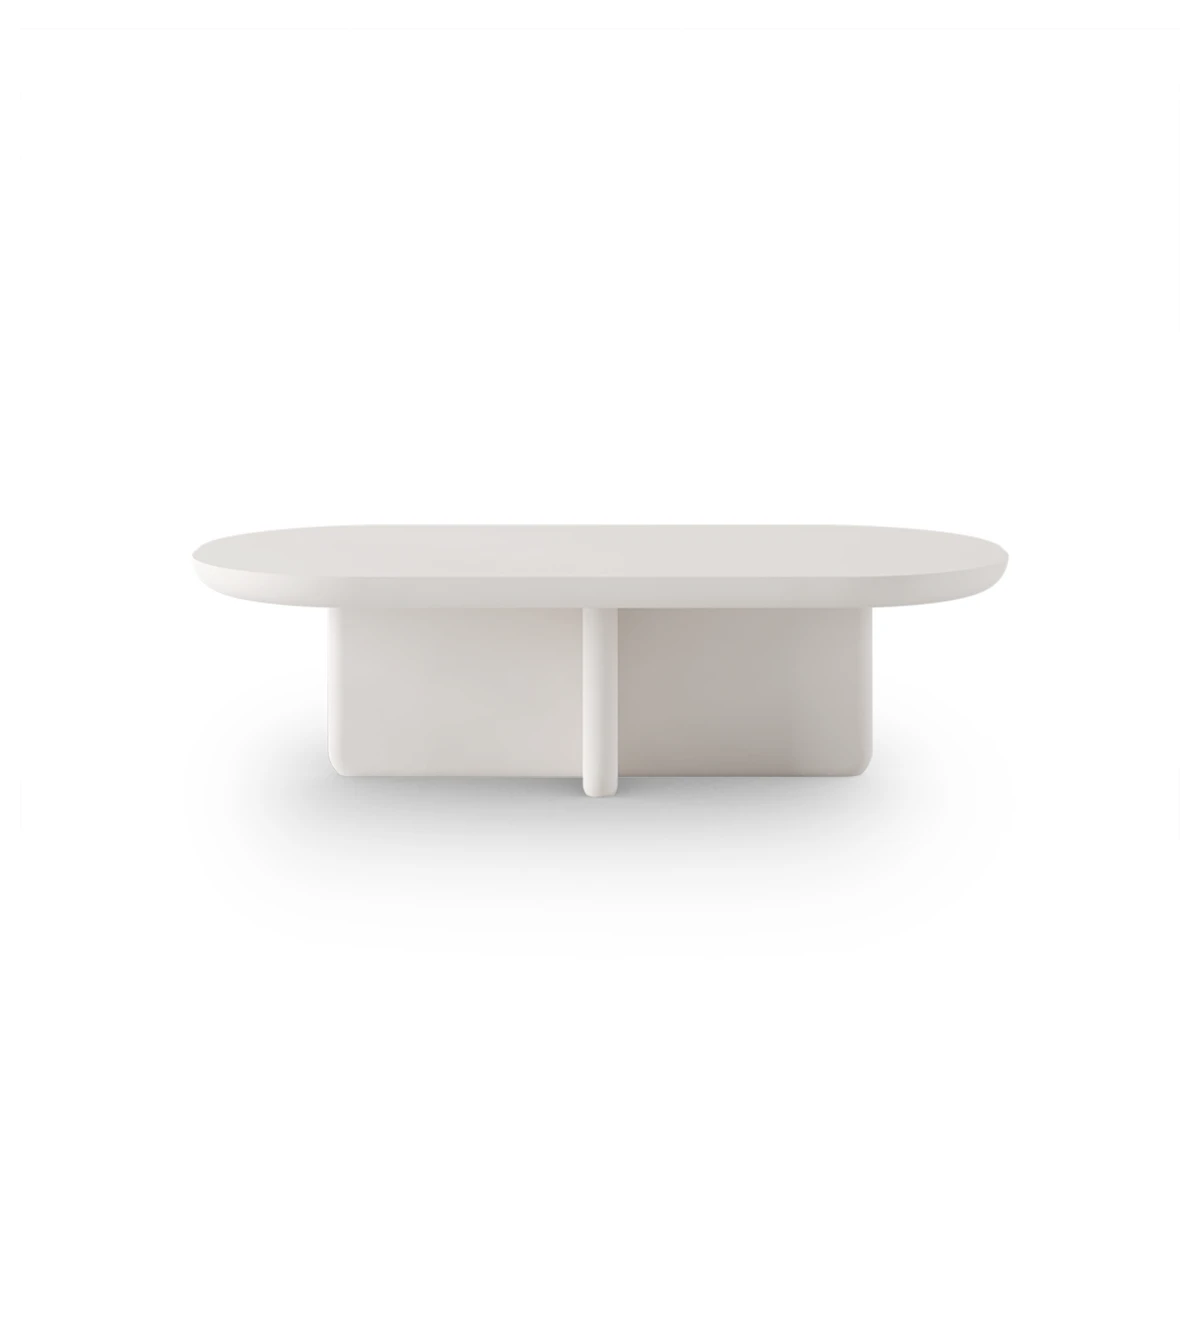 Monaco rectangular center table in pearl lacquer, 120 x 60 cm.